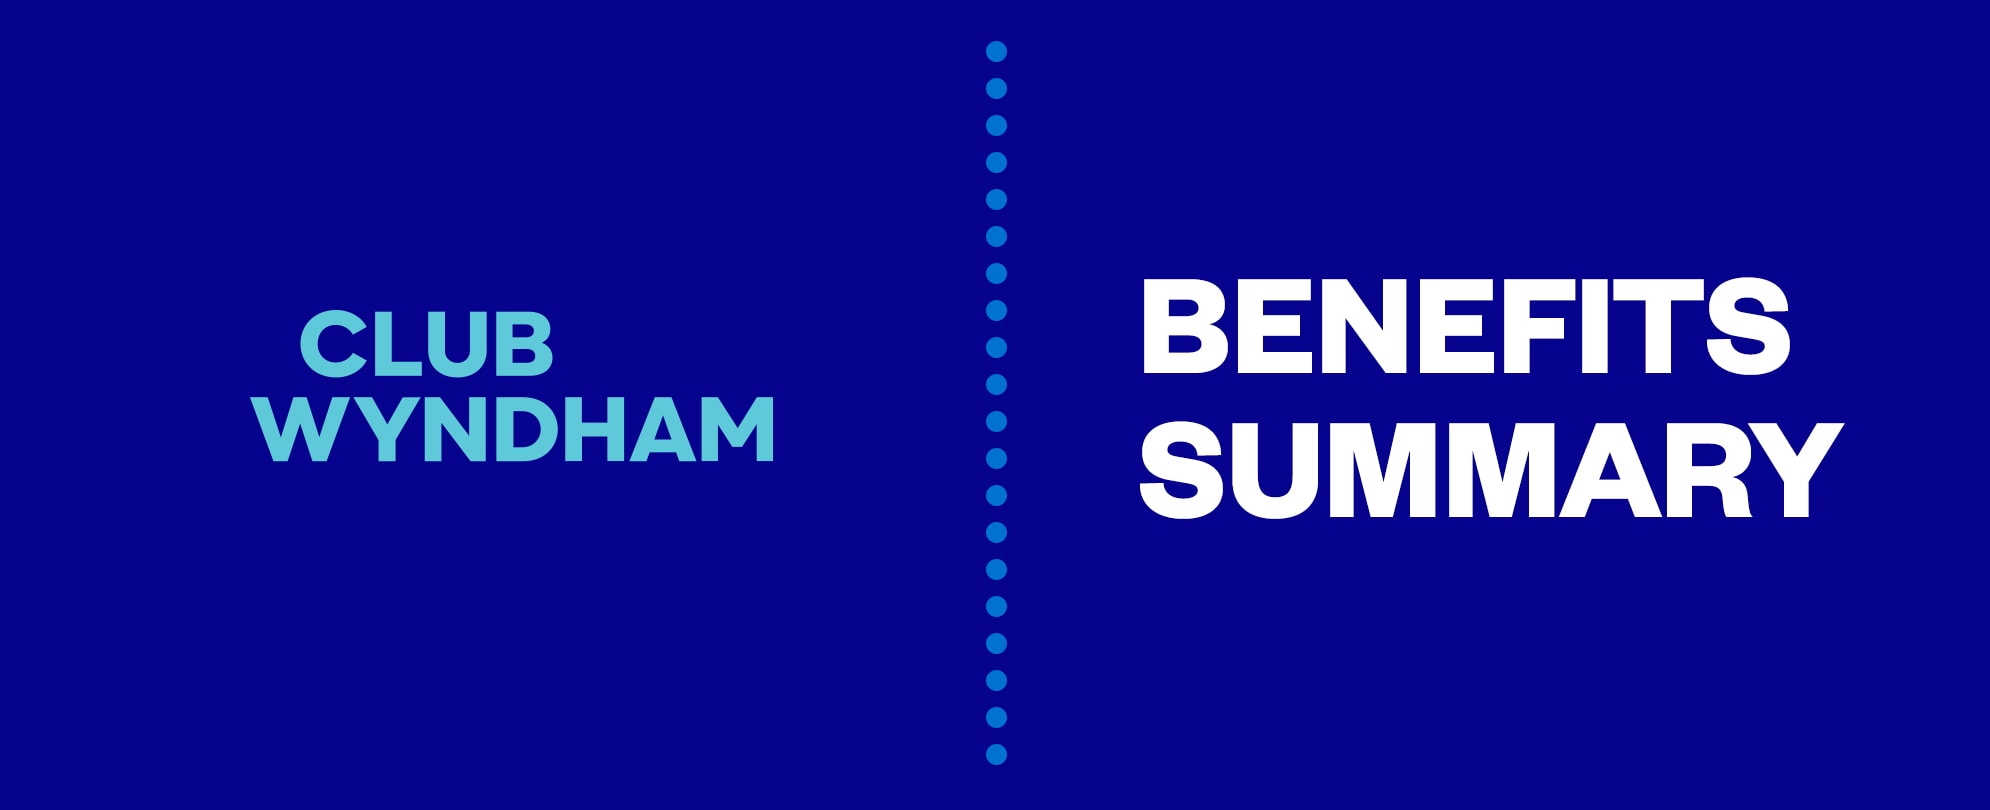 The Club Wyndham logo next to the words "Benefits Summary." 